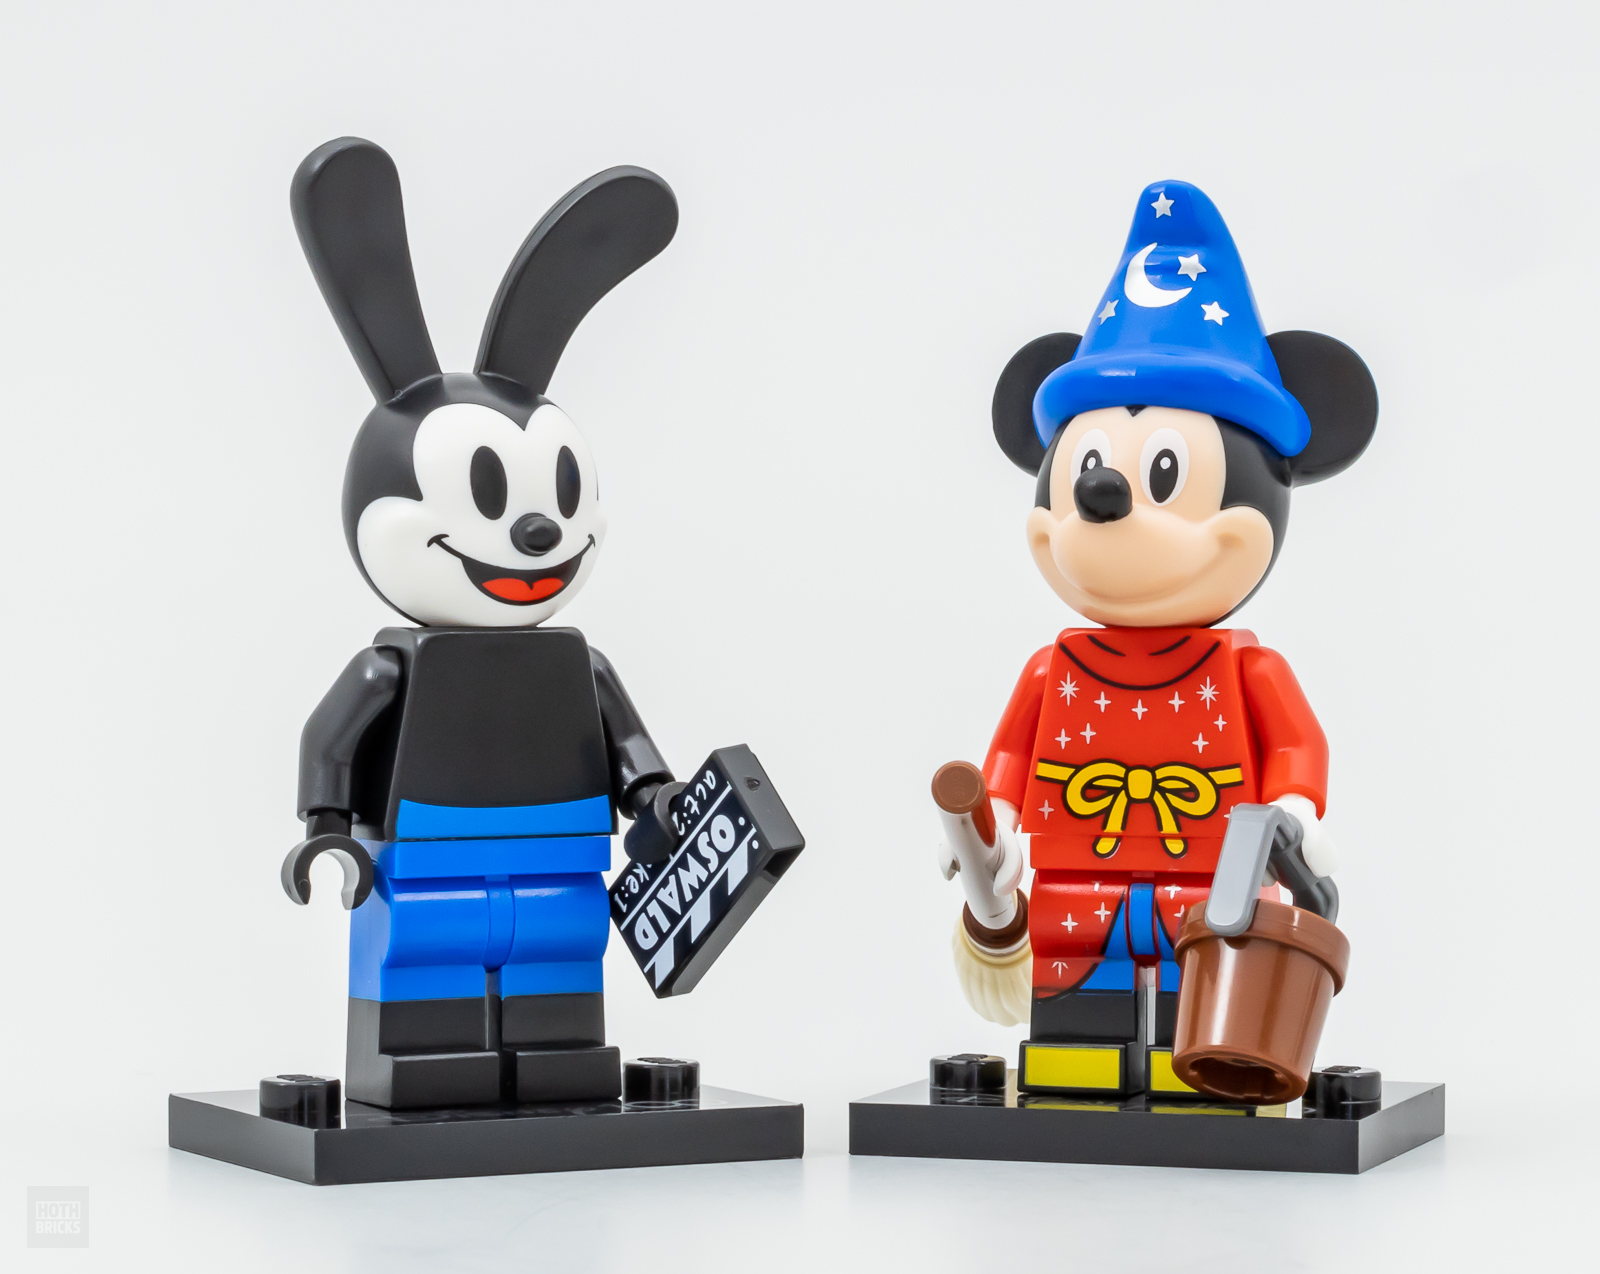 LEGO 71038 Disney 100 Minifigures Stitch 626 - Brand New No Open